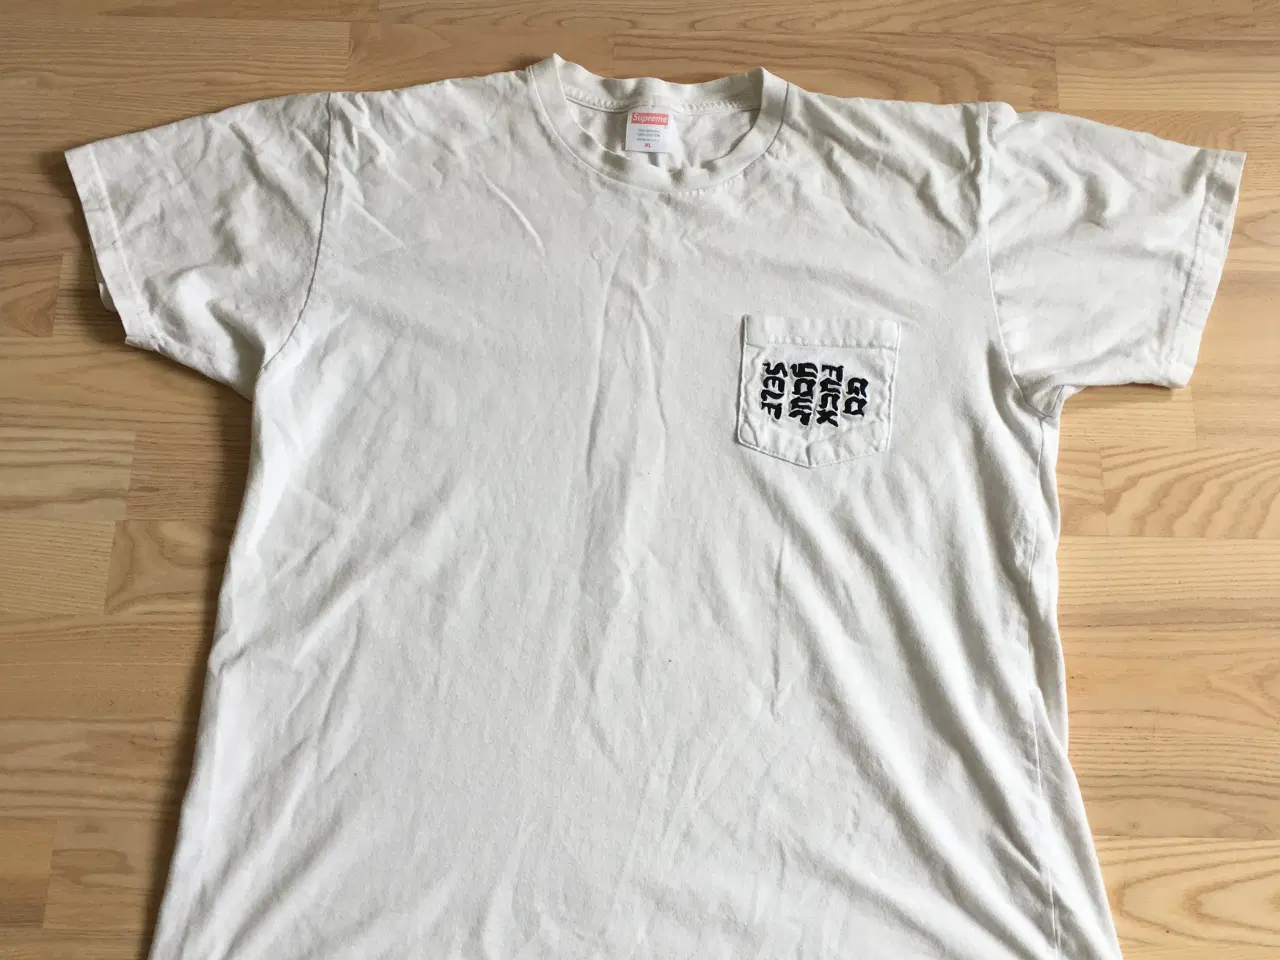 Billede 1 - 3 Supreme t-shirts, str. XL